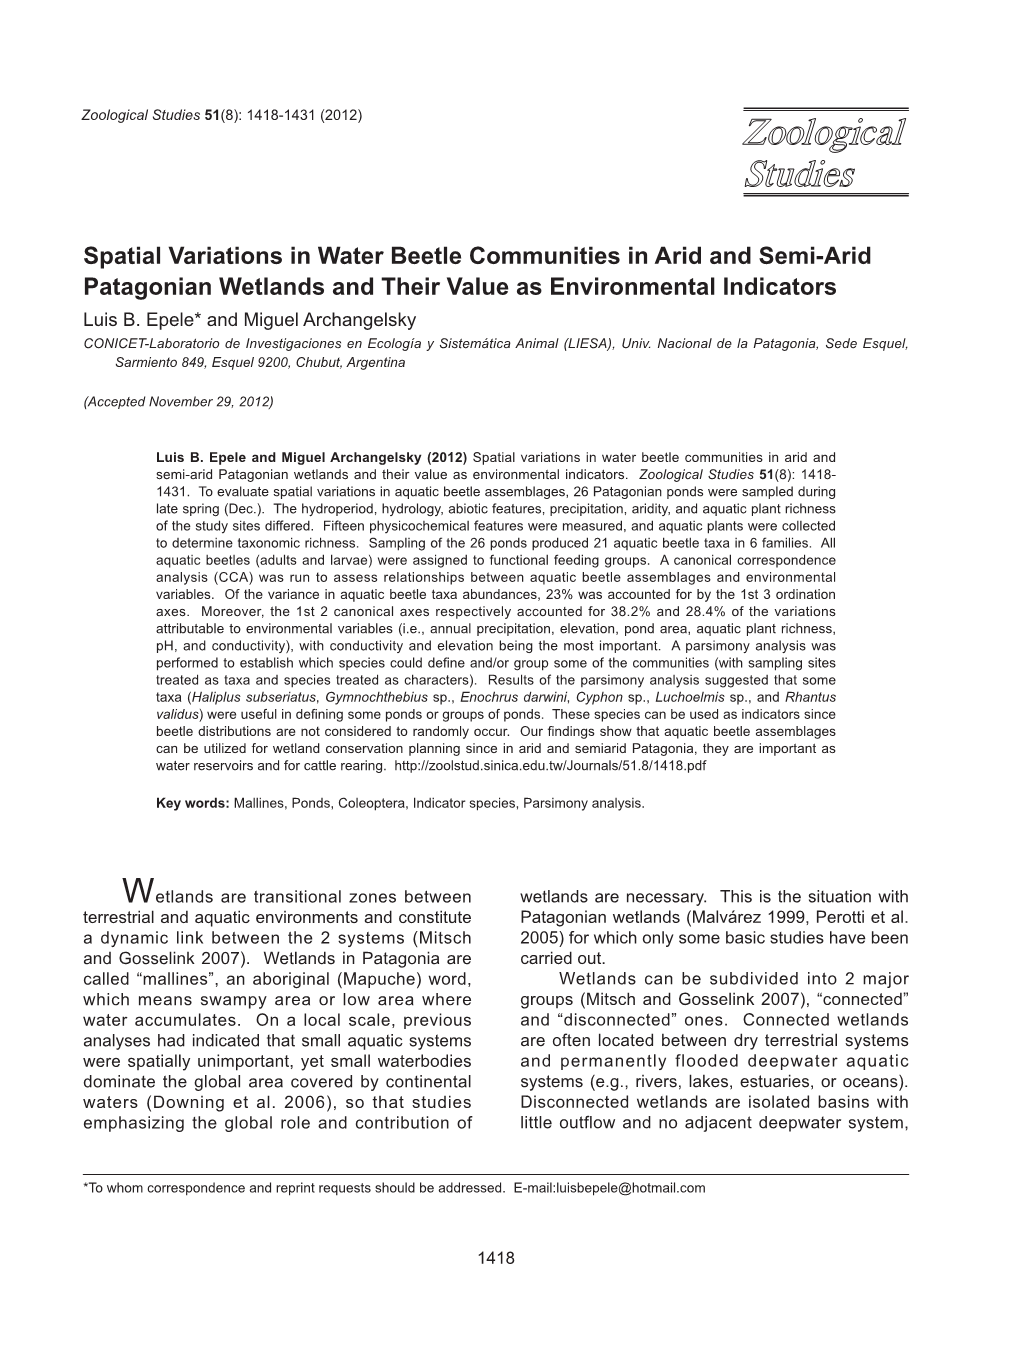 Spatial Variations in Water Beetle Communities in Arid and Semi-Arid Patagonian Wetlands and Their Value As Environmental Indicators Luis B